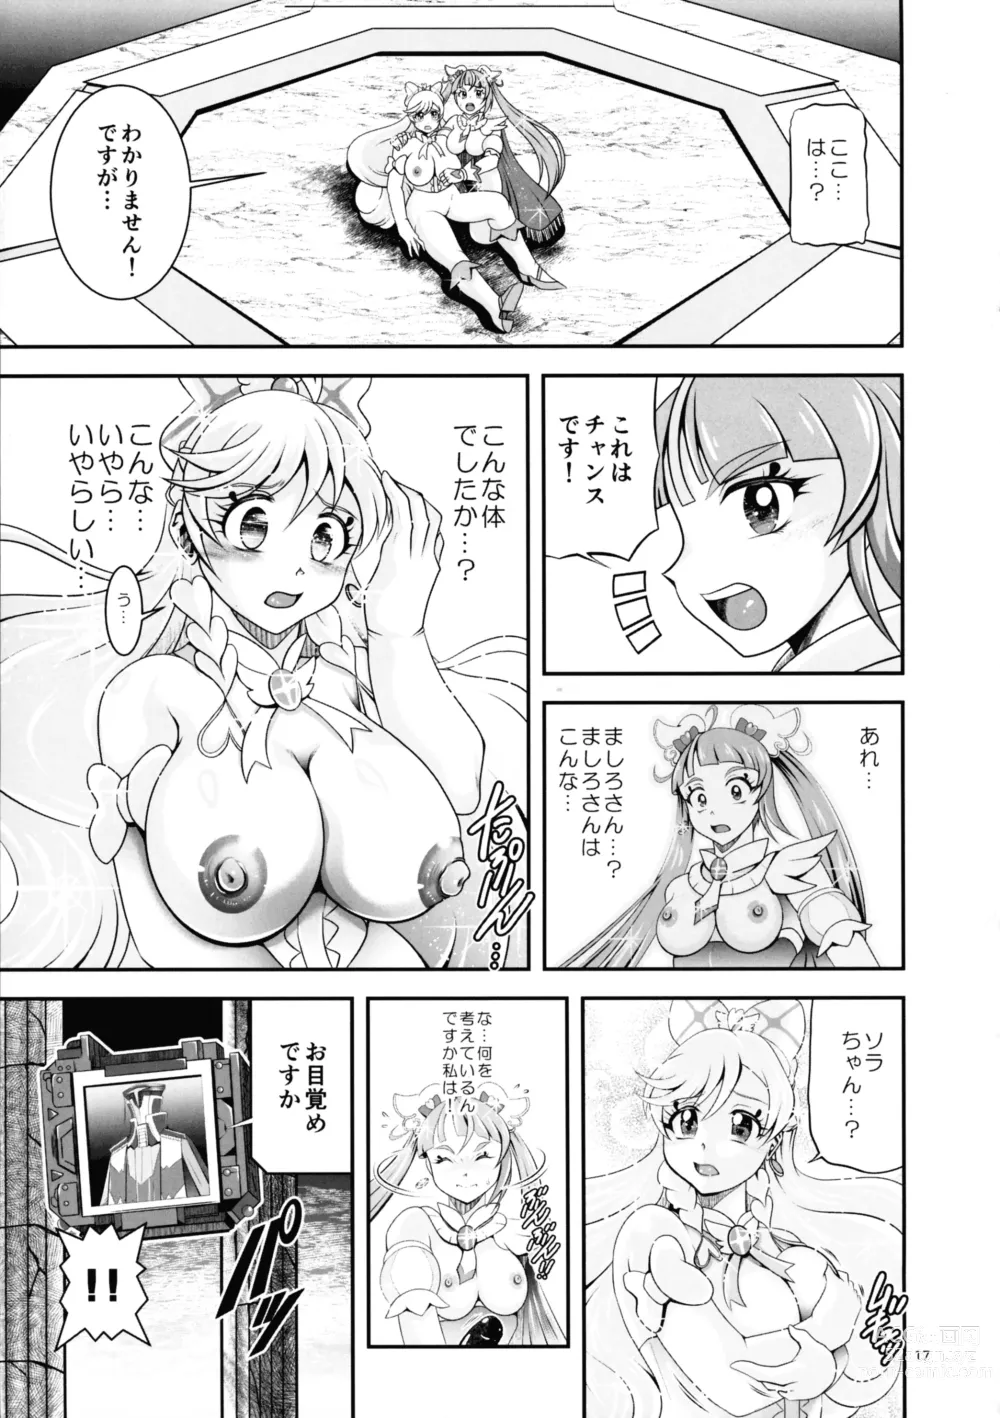 Page 17 of doujinshi Soukyuu BRANDNEW SKY